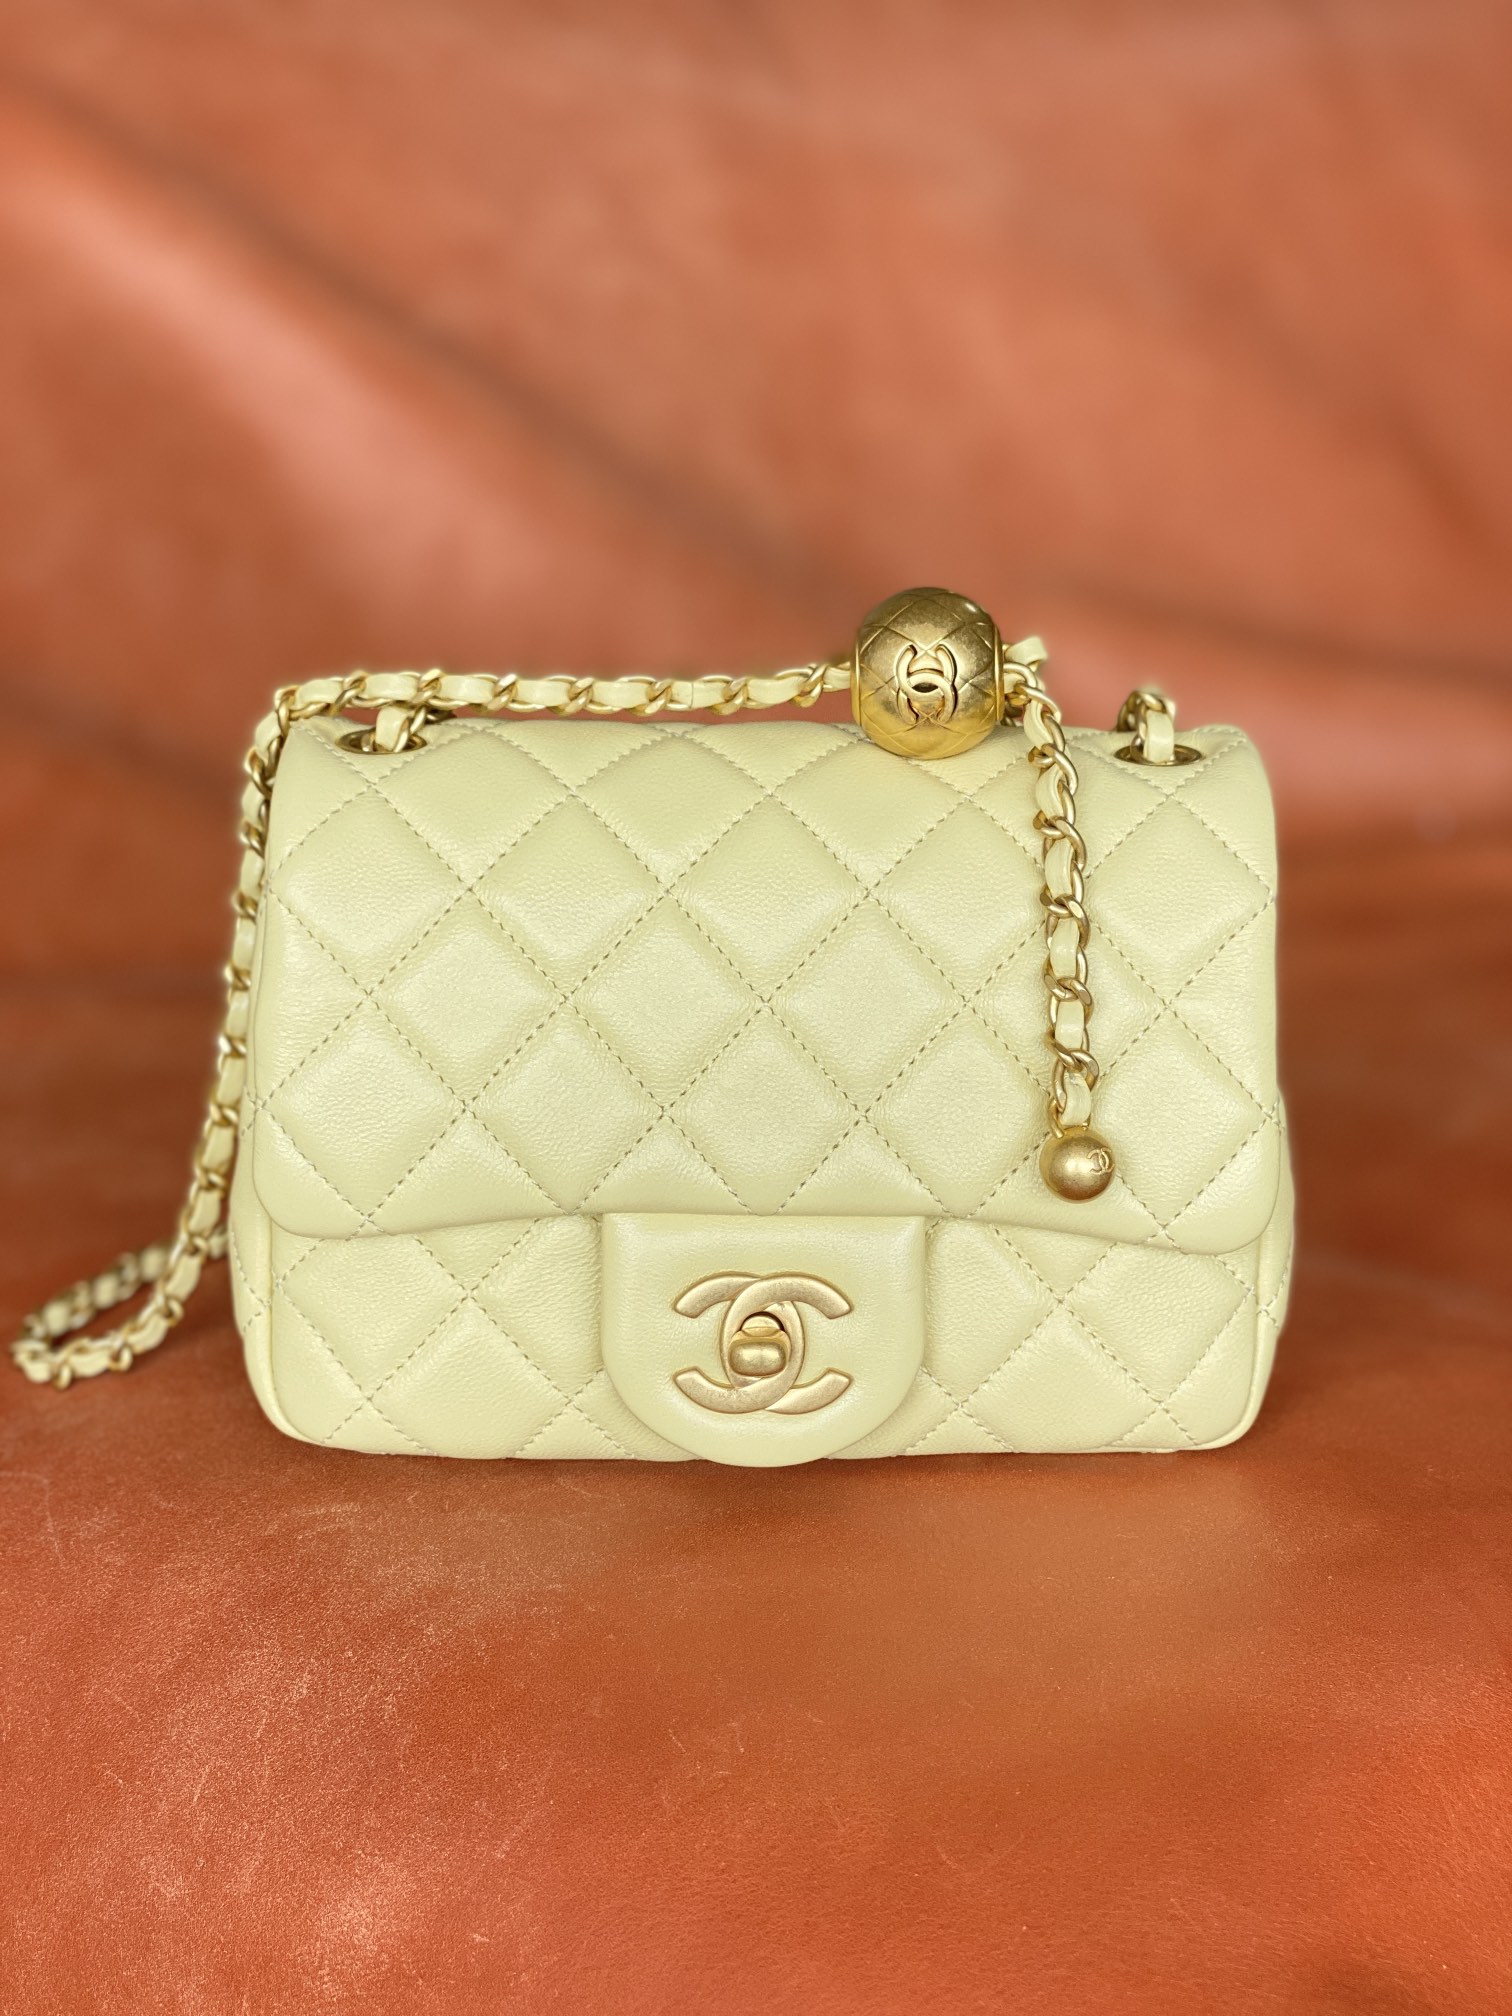 CHANEL Enamel Pearl Coco Chanel Bag Charm Gold 244472